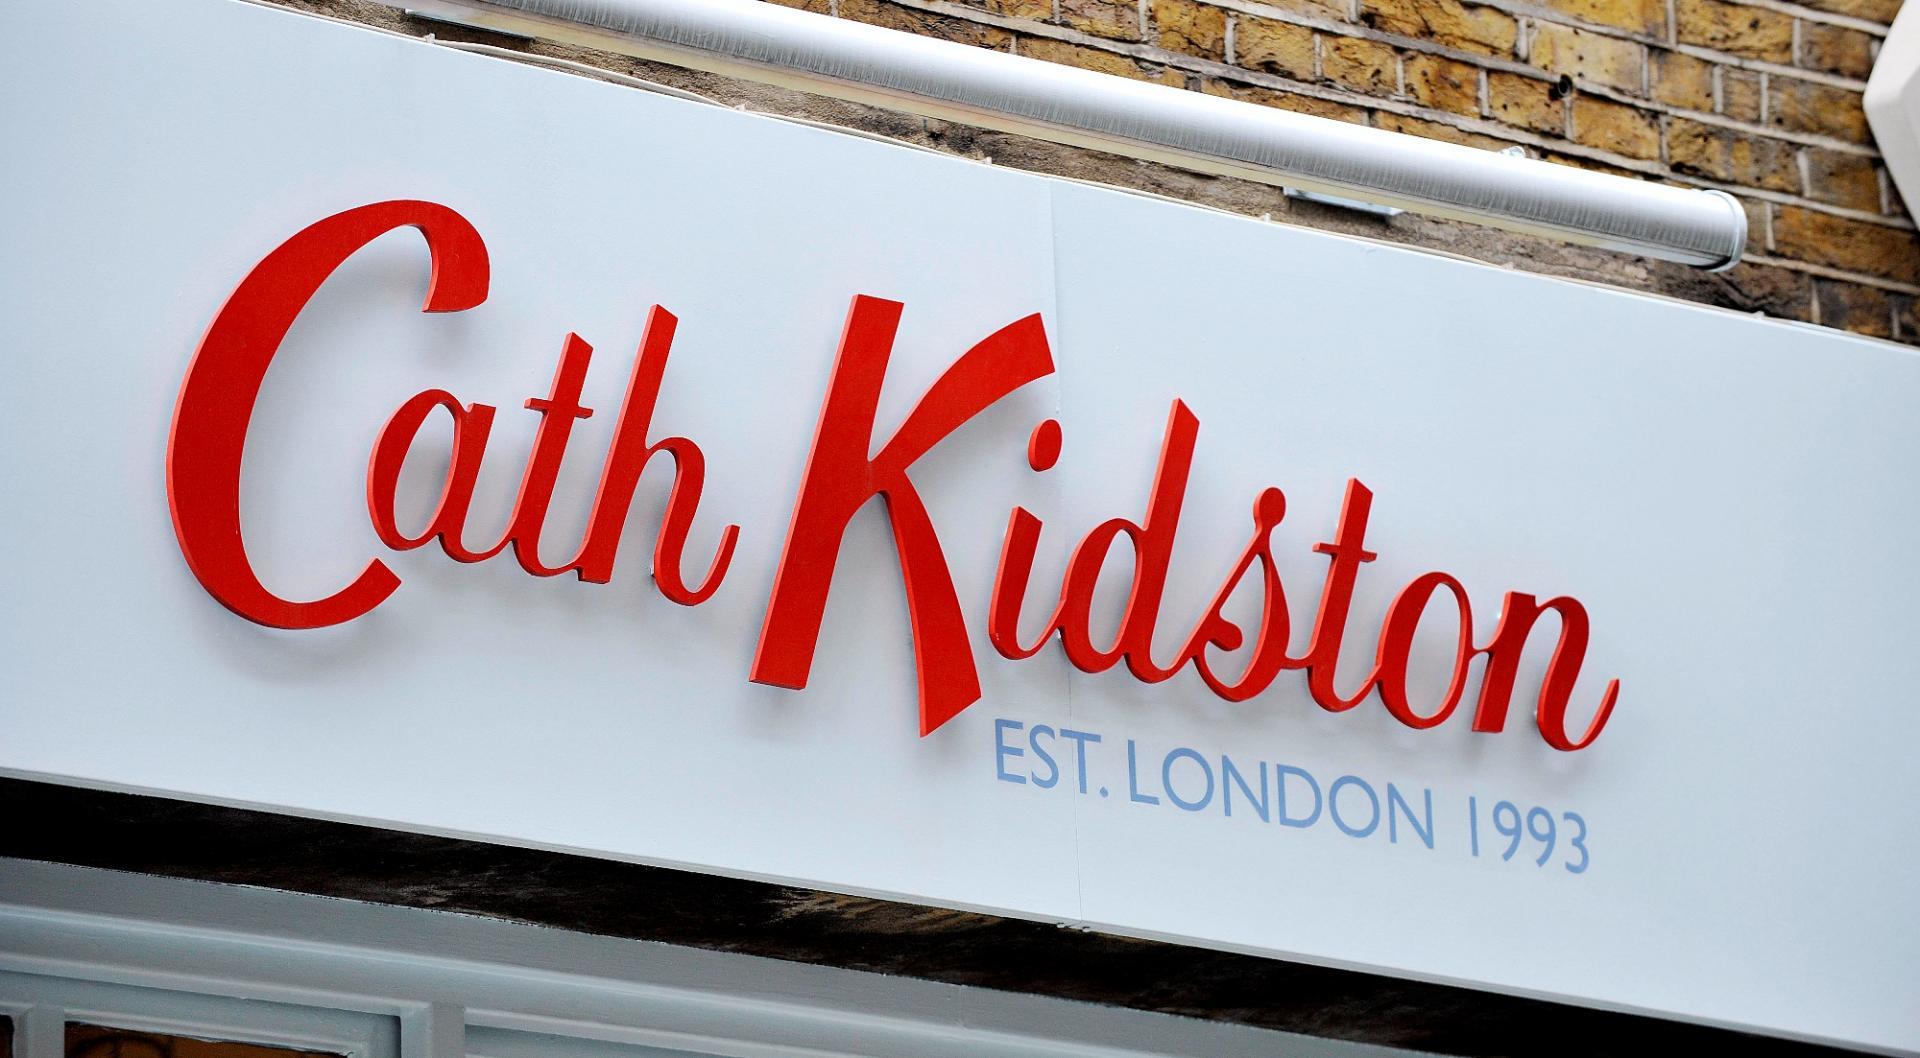 Next acquires Cath Kidston